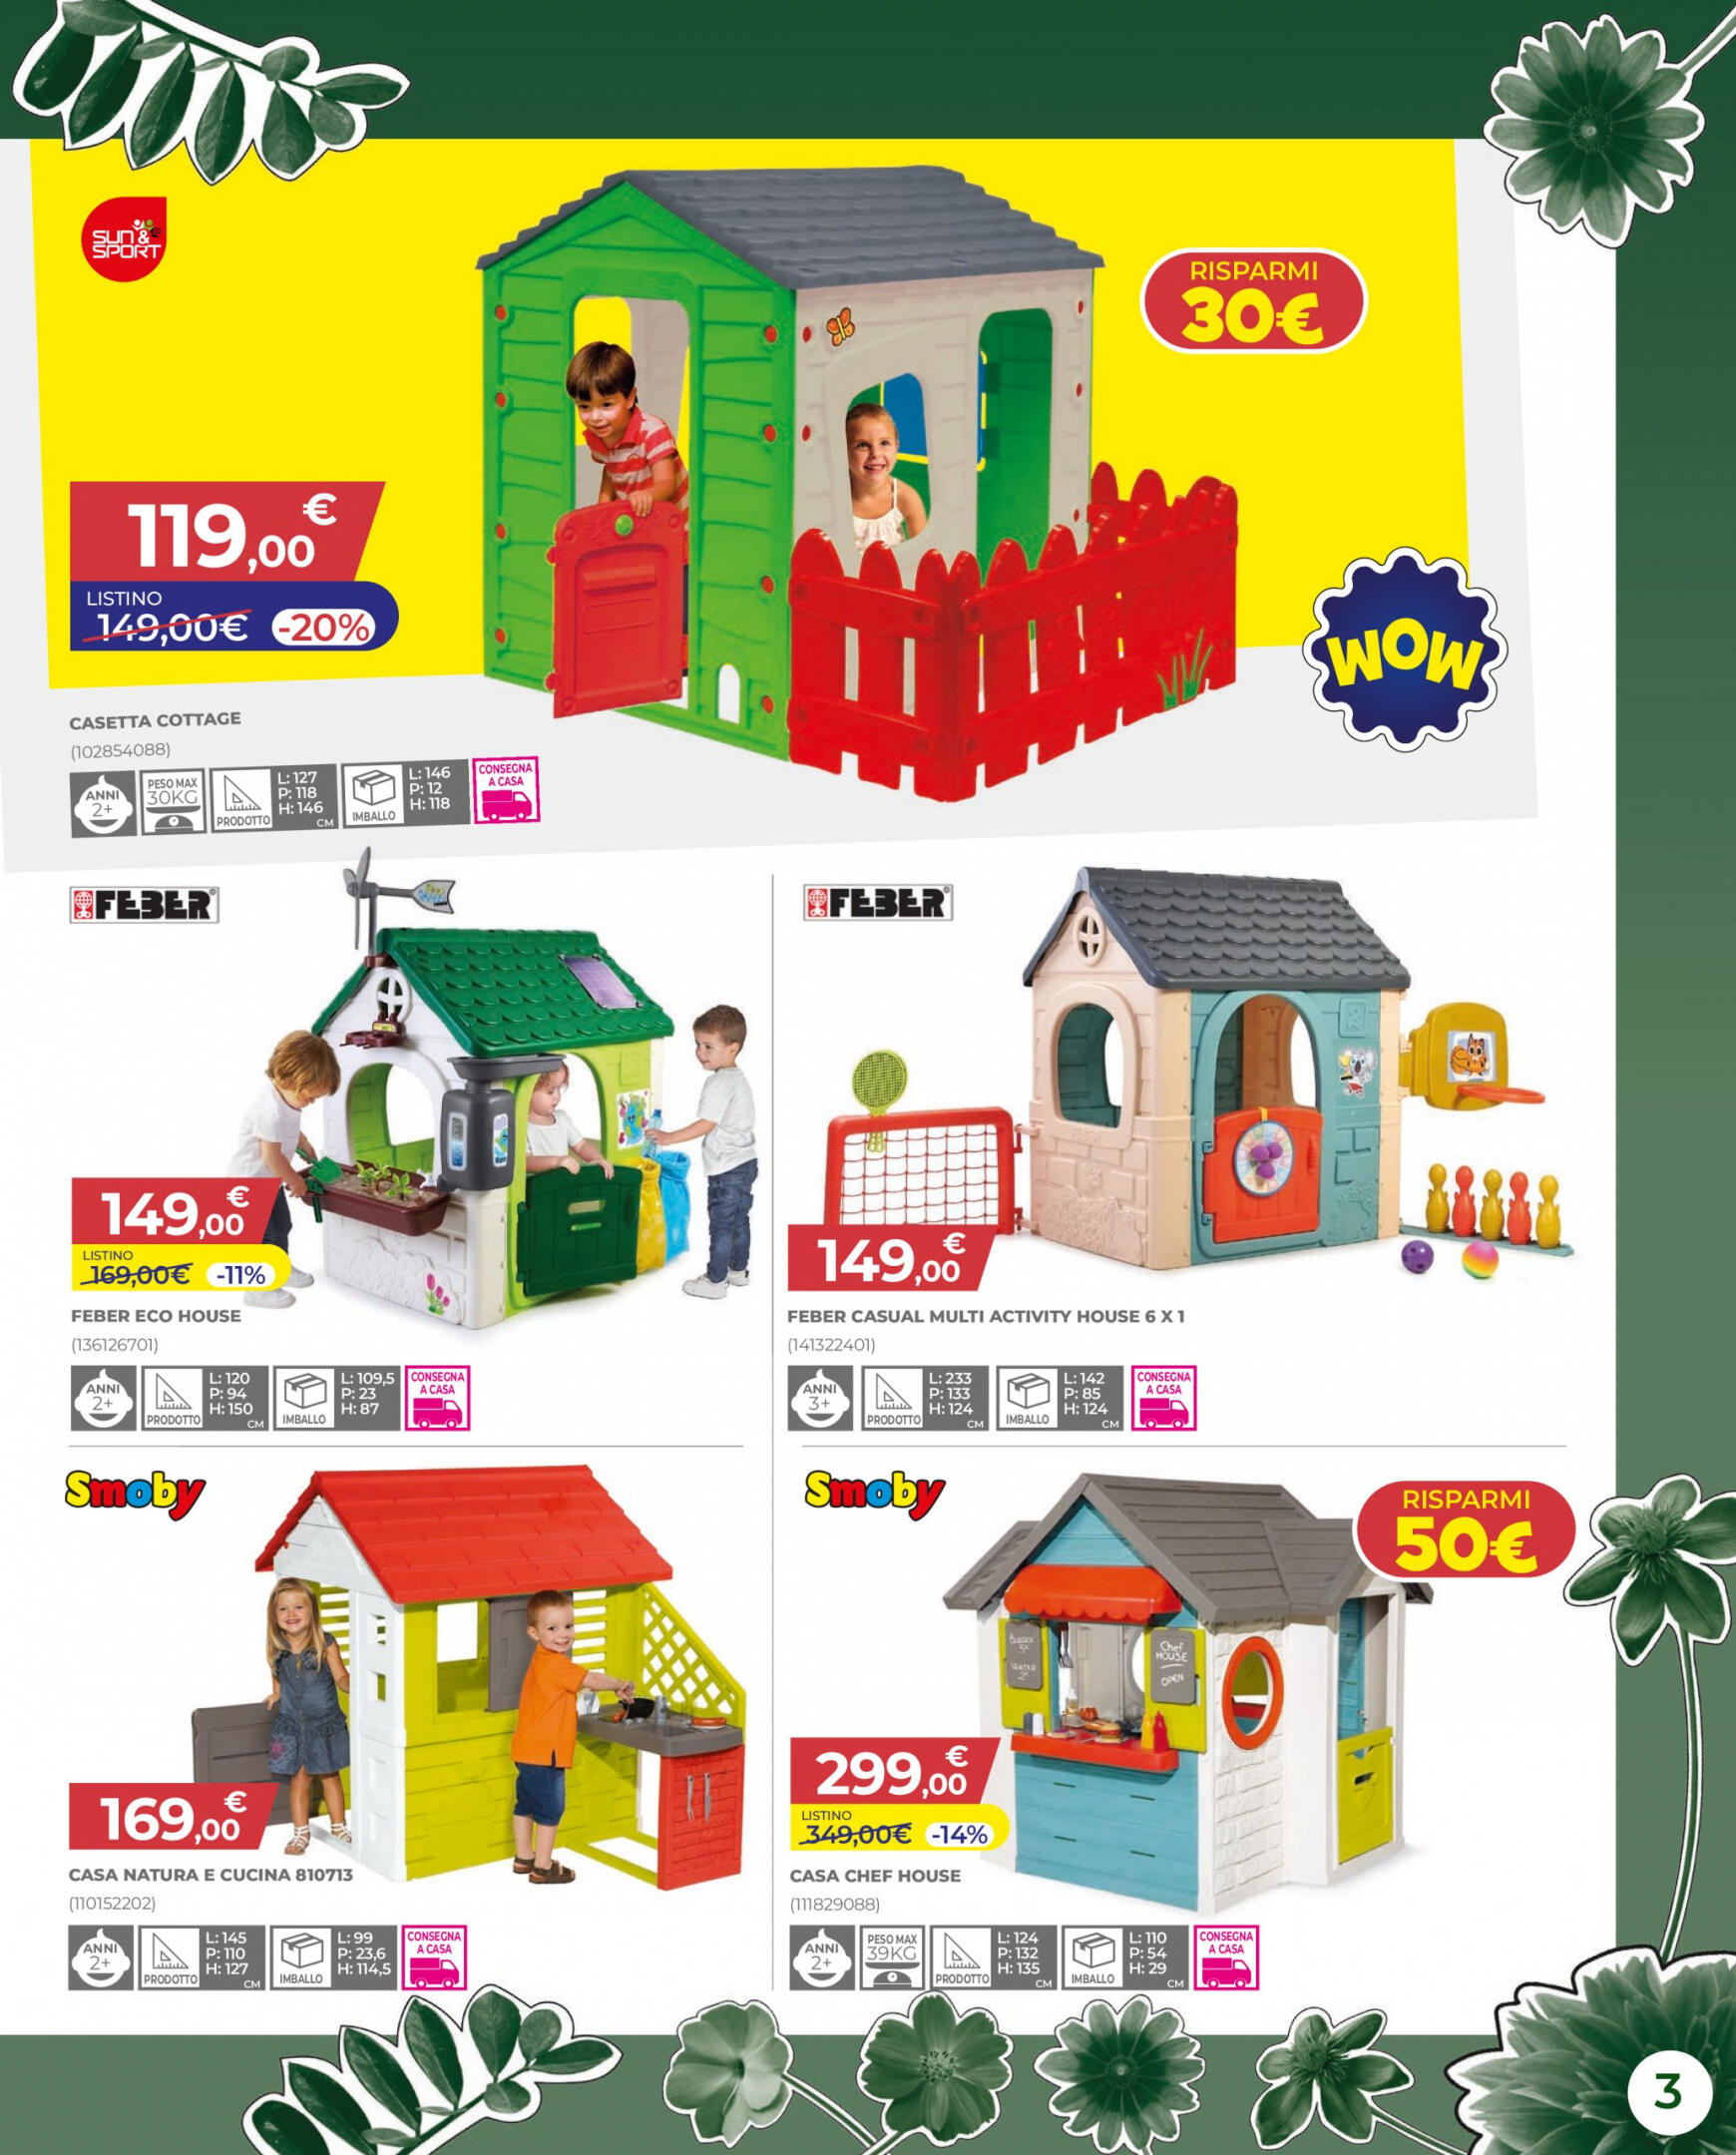 toys-center - Nuovo volantino Toys Center 04.04. - 08.05. - page: 3